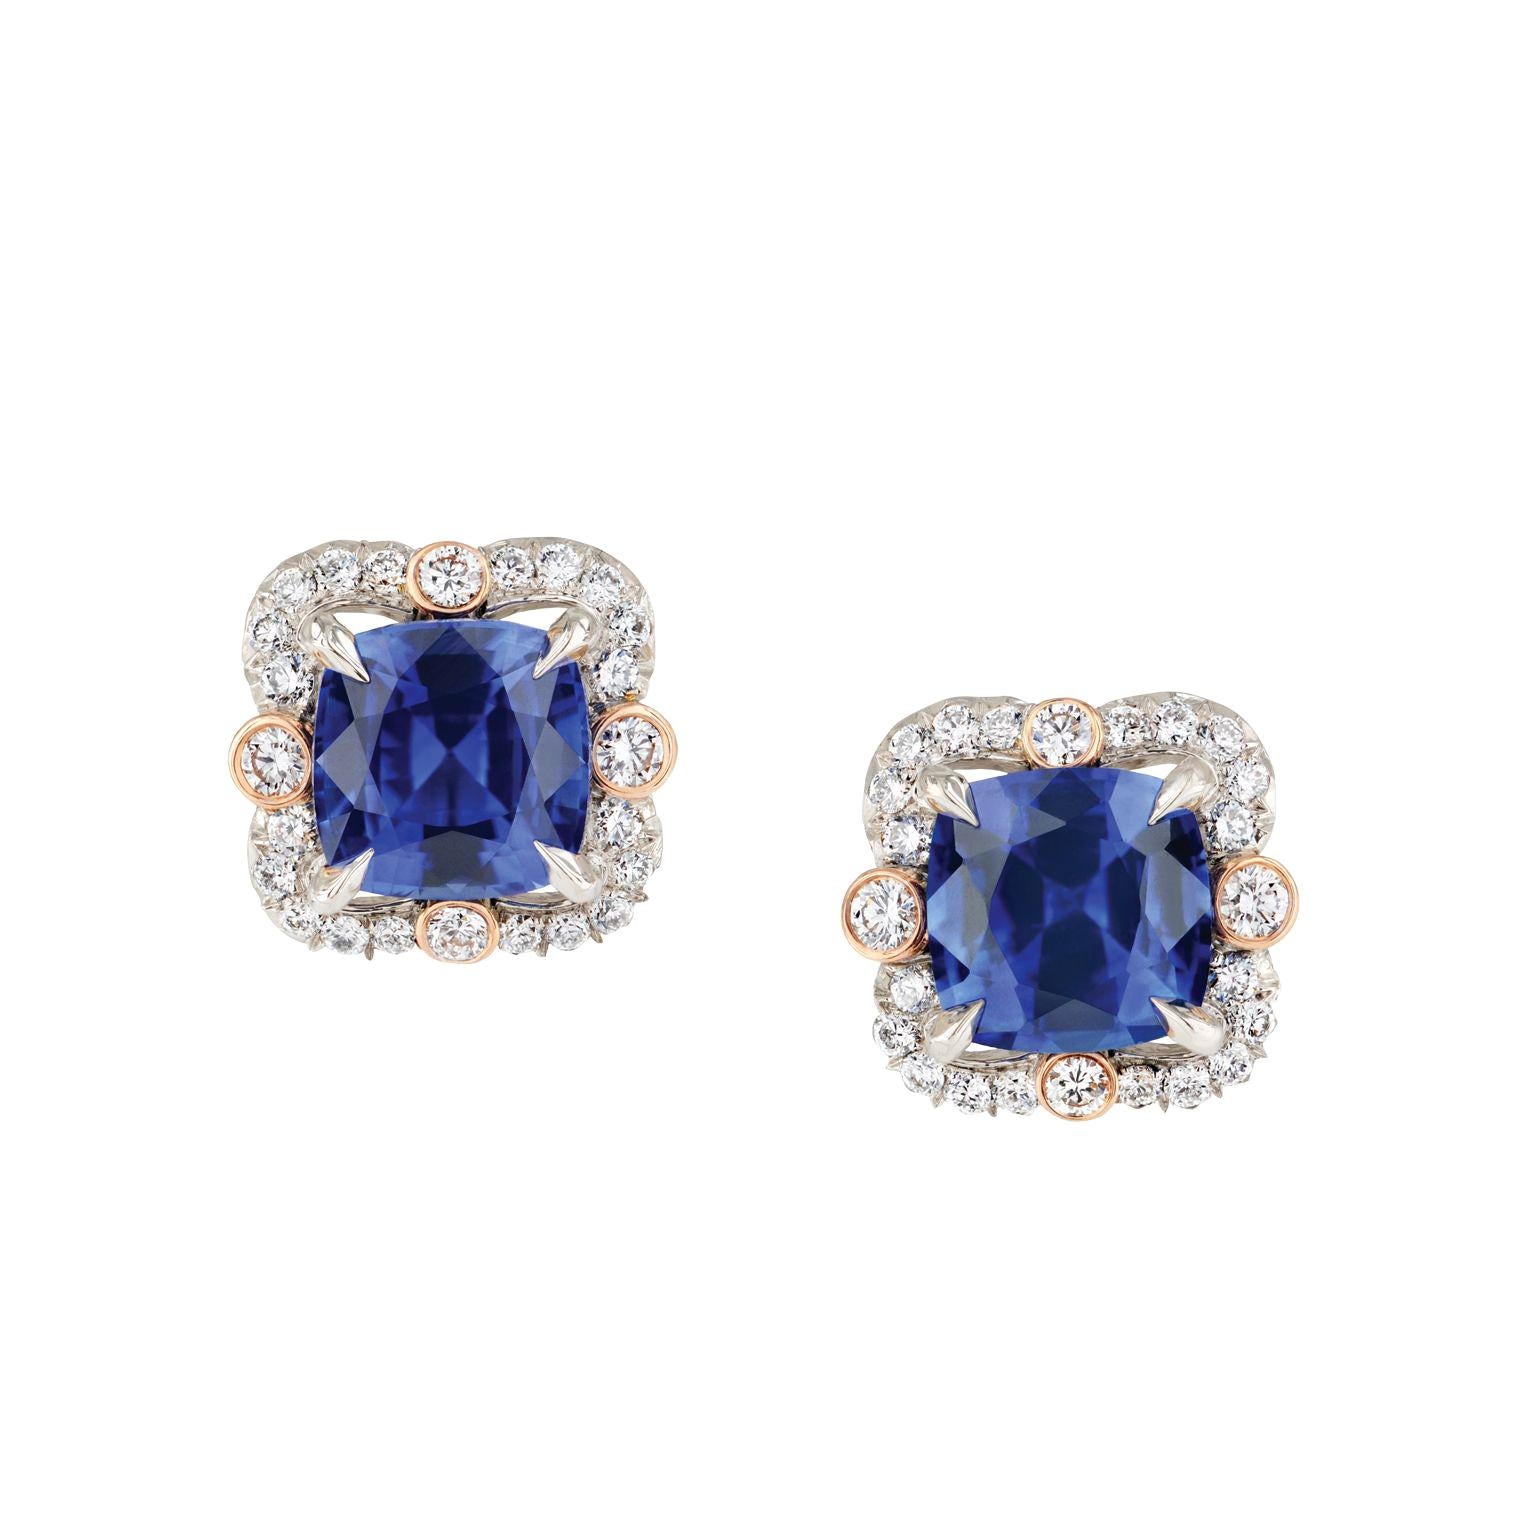 Fabergé Ella 2 Cushion Sapphires 3.49 Carat and Round White Diamonds Earrings